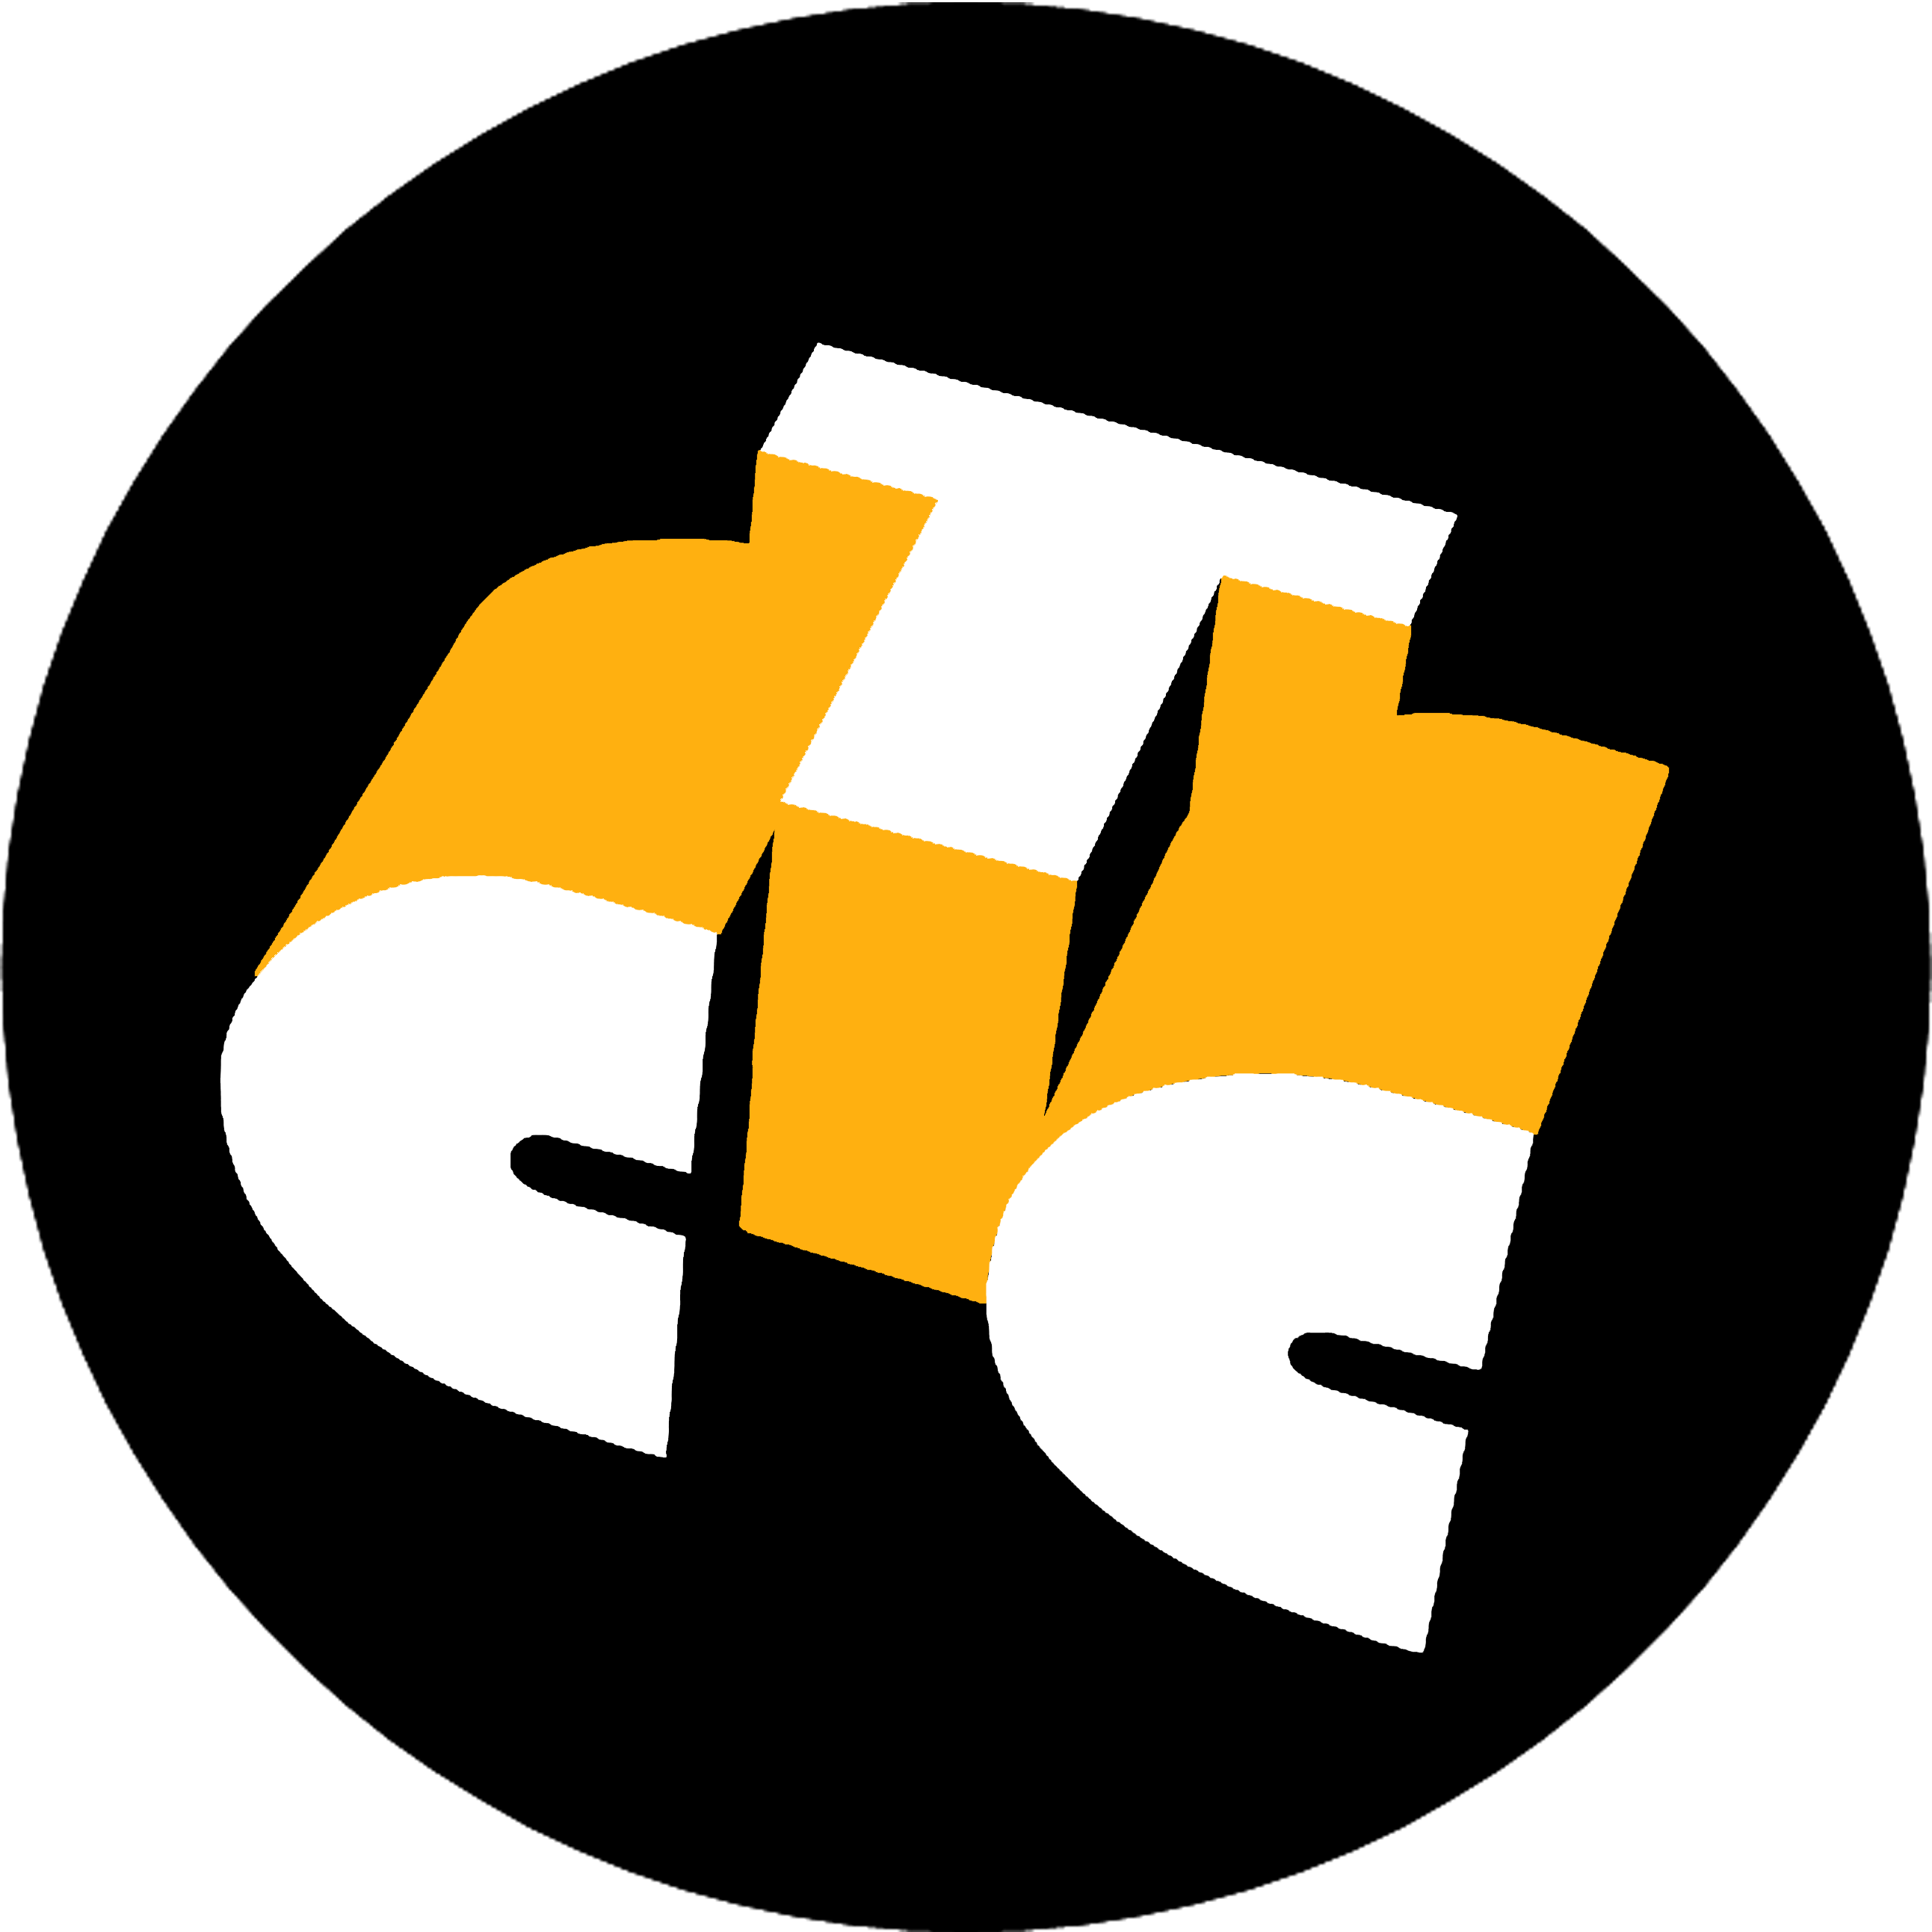 СТС лого 1996. Логотипы каналов СТС 1996. СТС 2001-2005. Логотип канала.